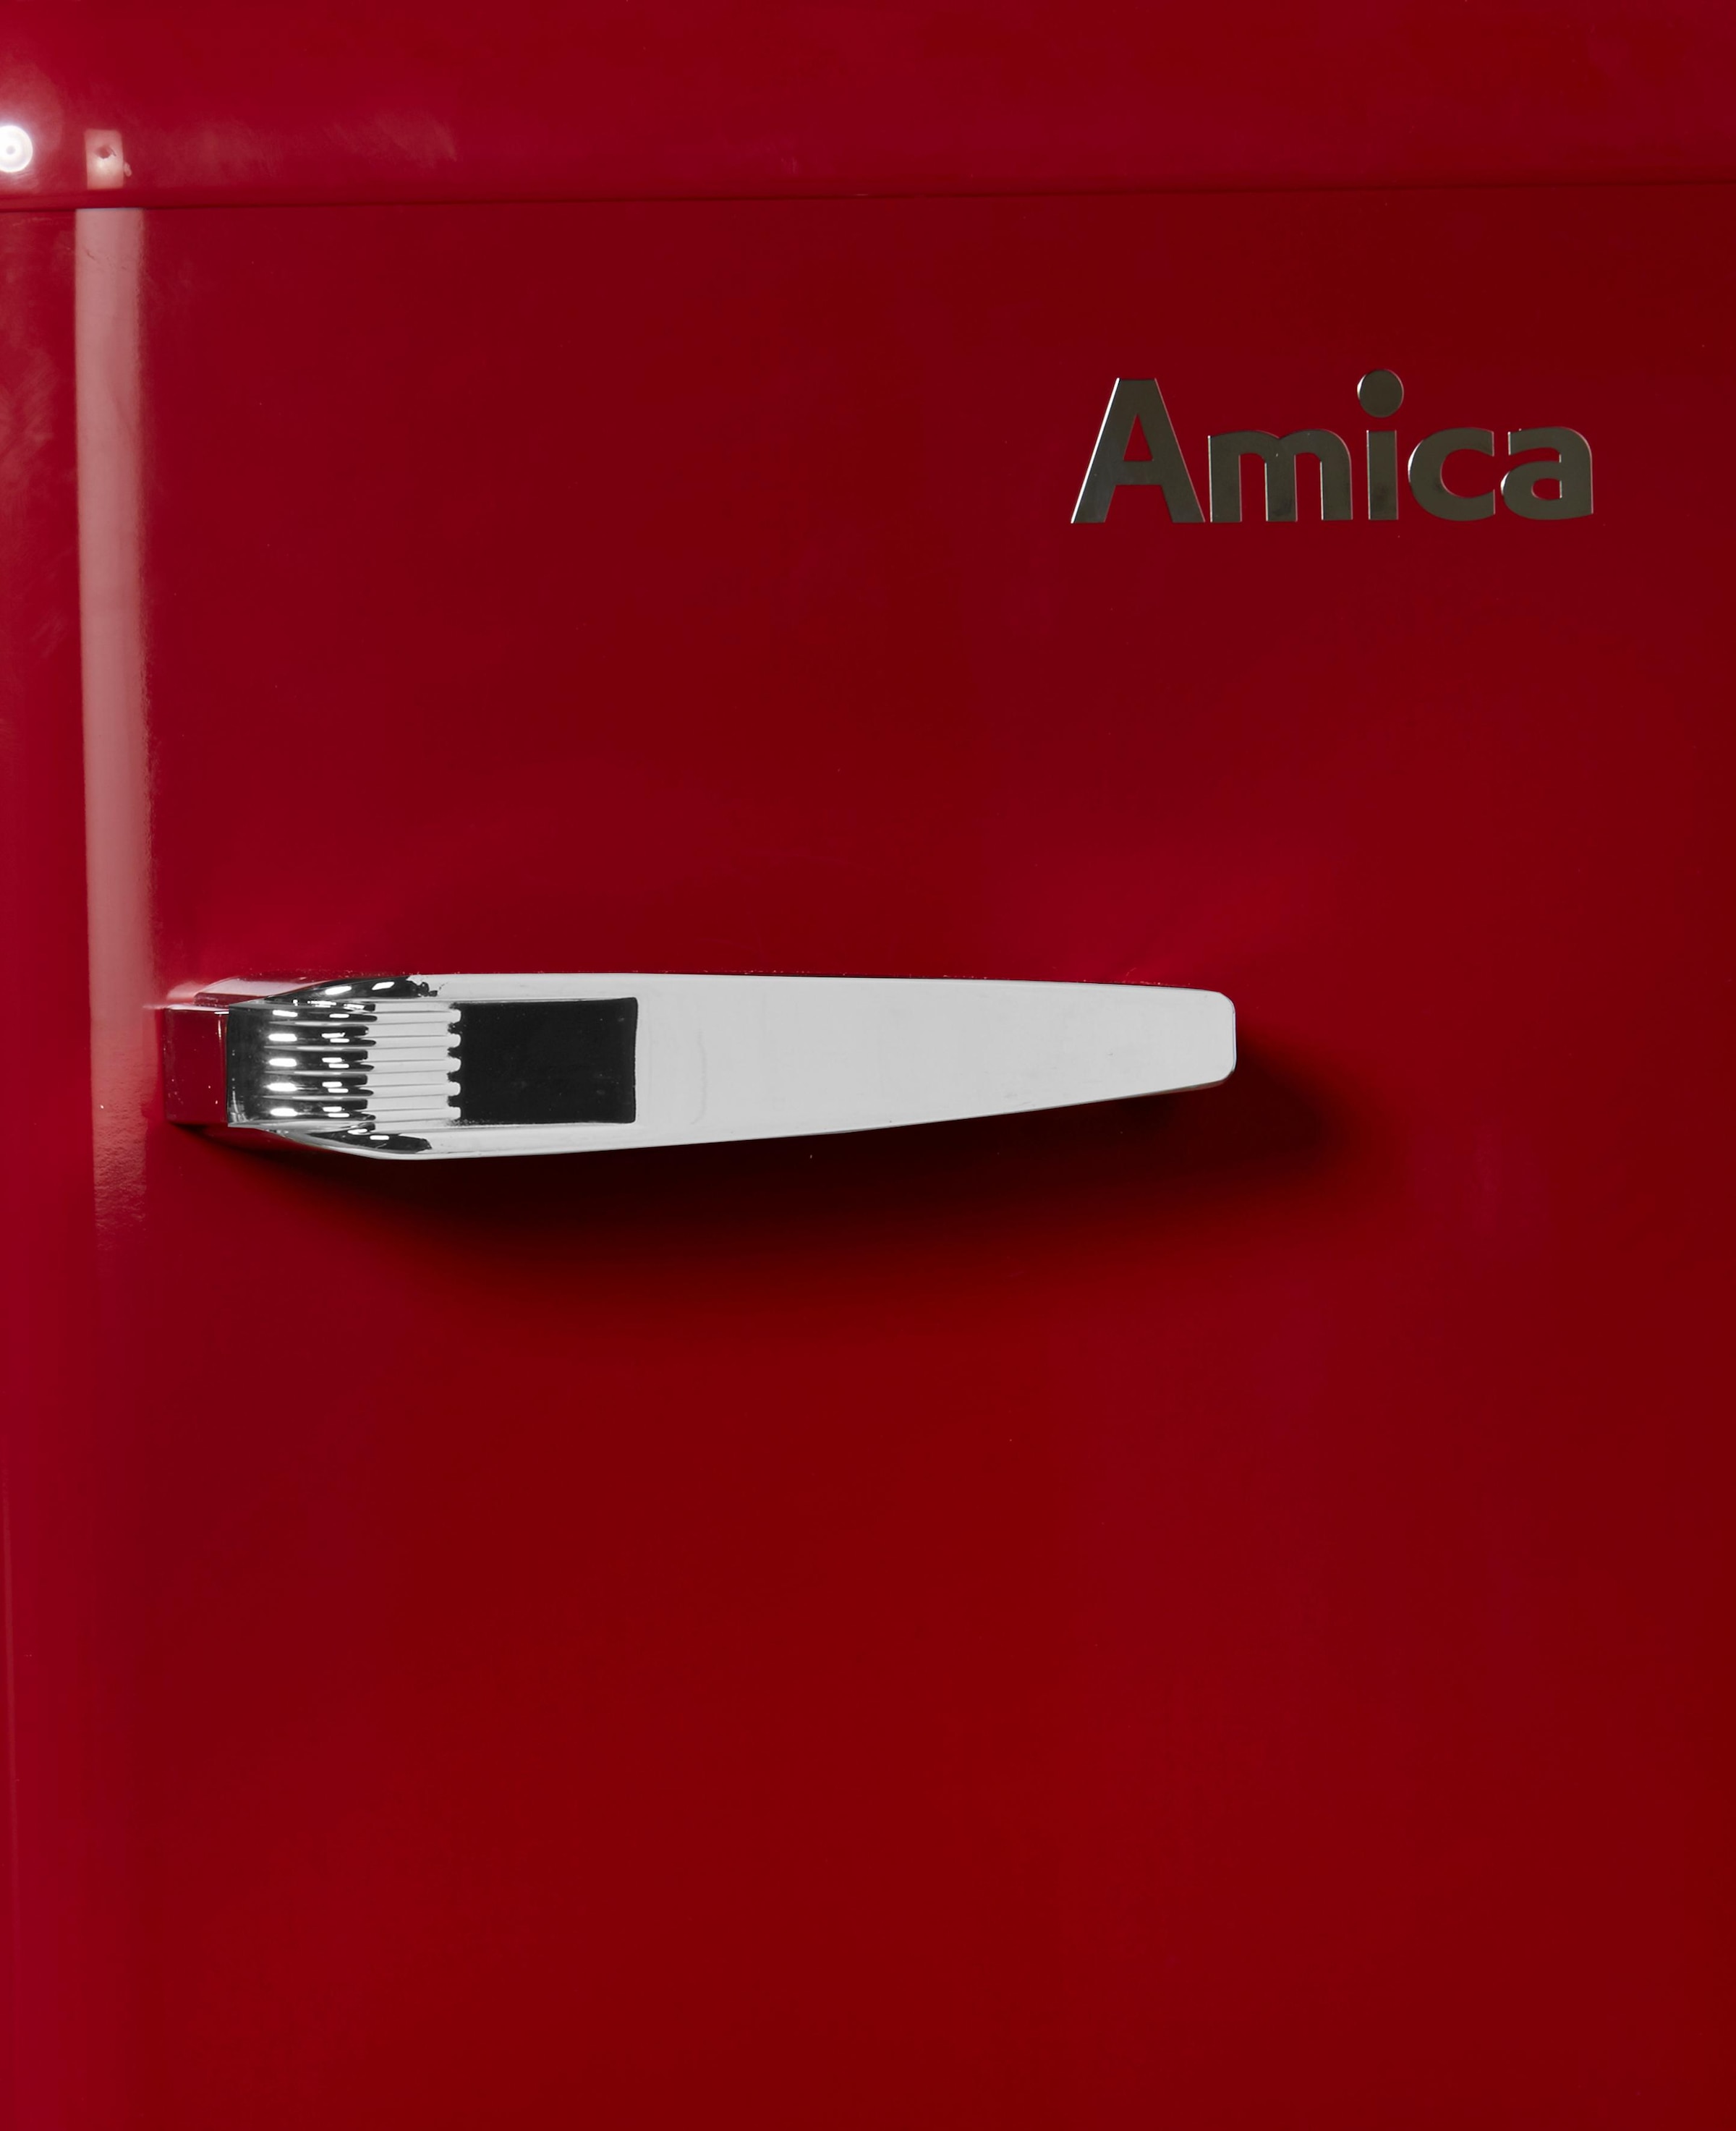 Amica Table Top Kühlschrank, KS 15611 R, 87,5 cm hoch, 55 cm breit